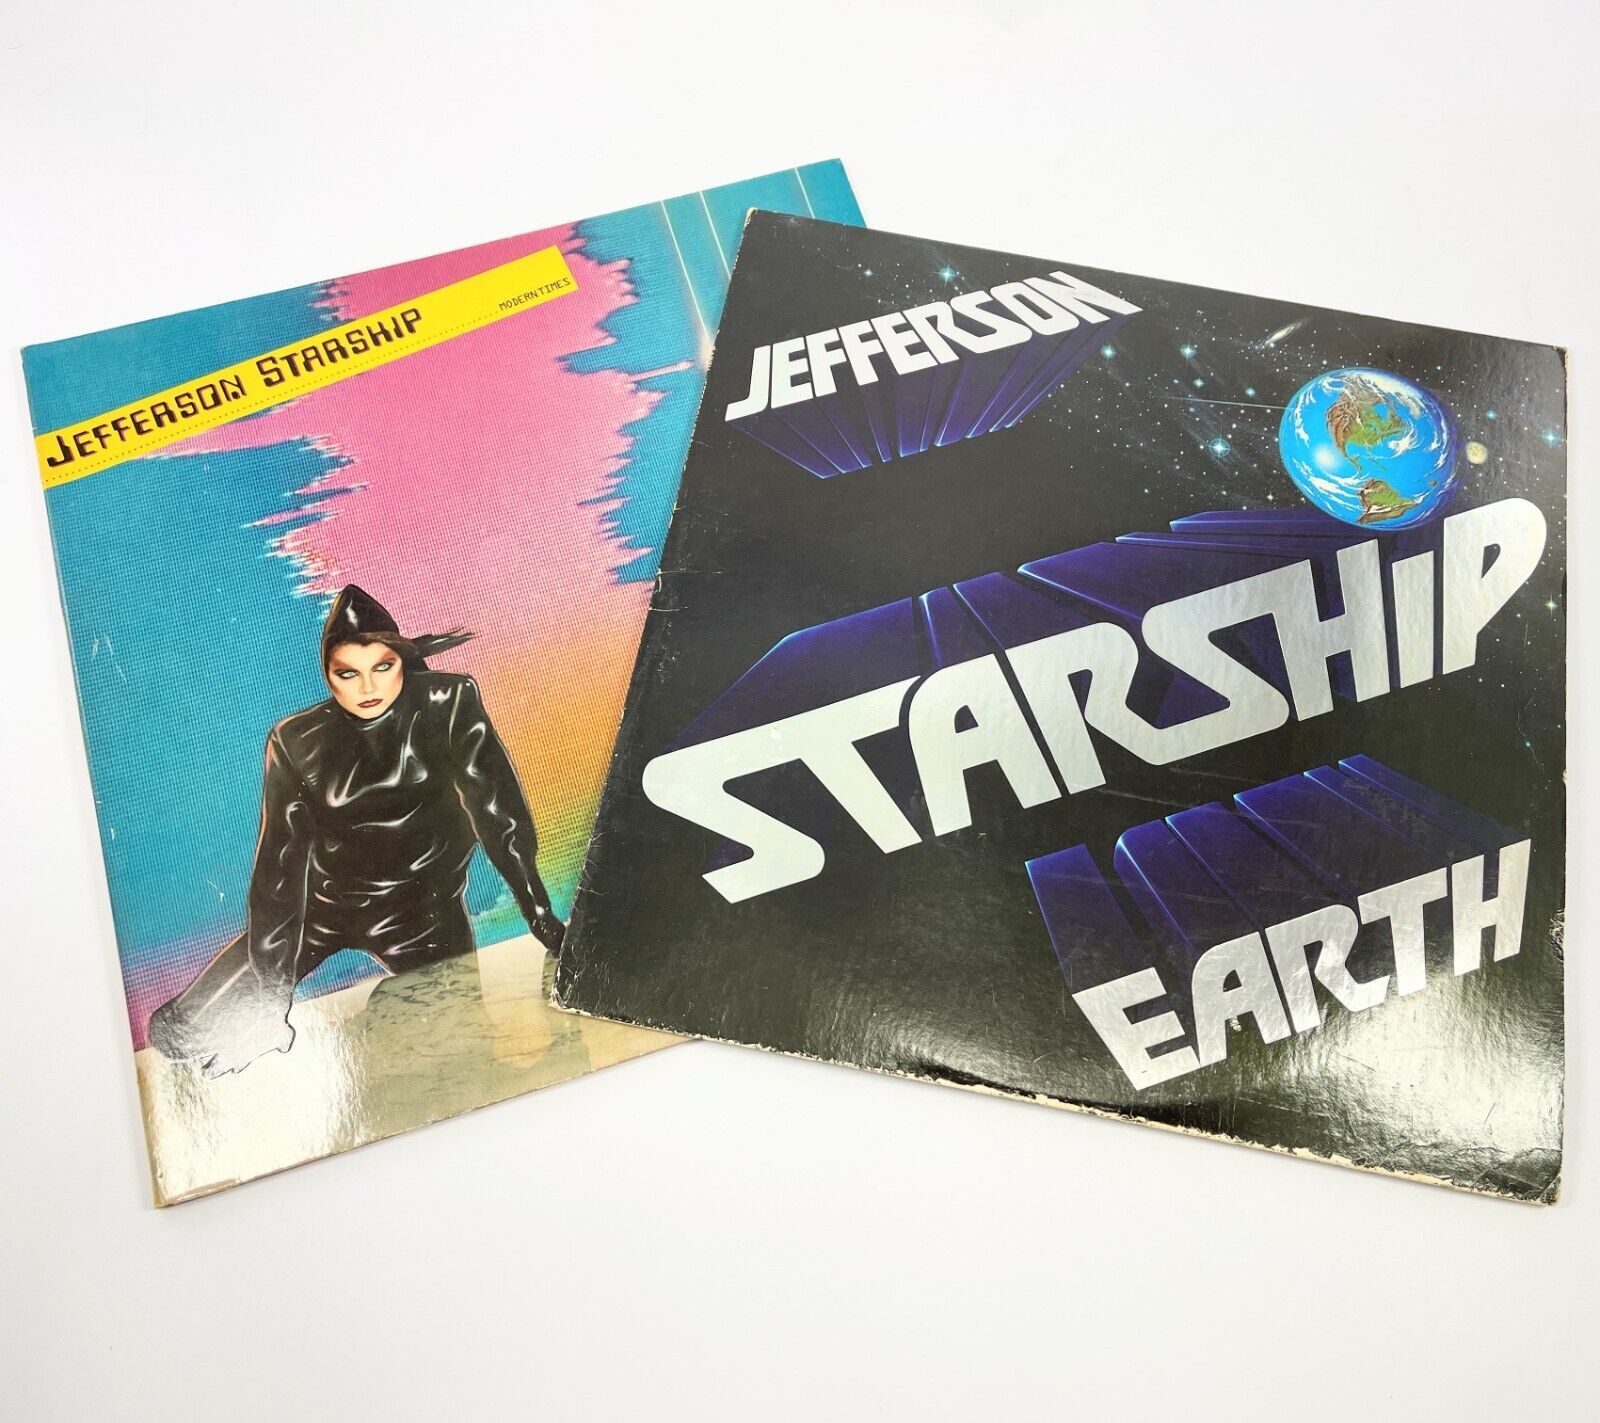 Vintage Vinyl LP Jefferson Starship Modern Times & Earth Lot of 2 Vinyl Records